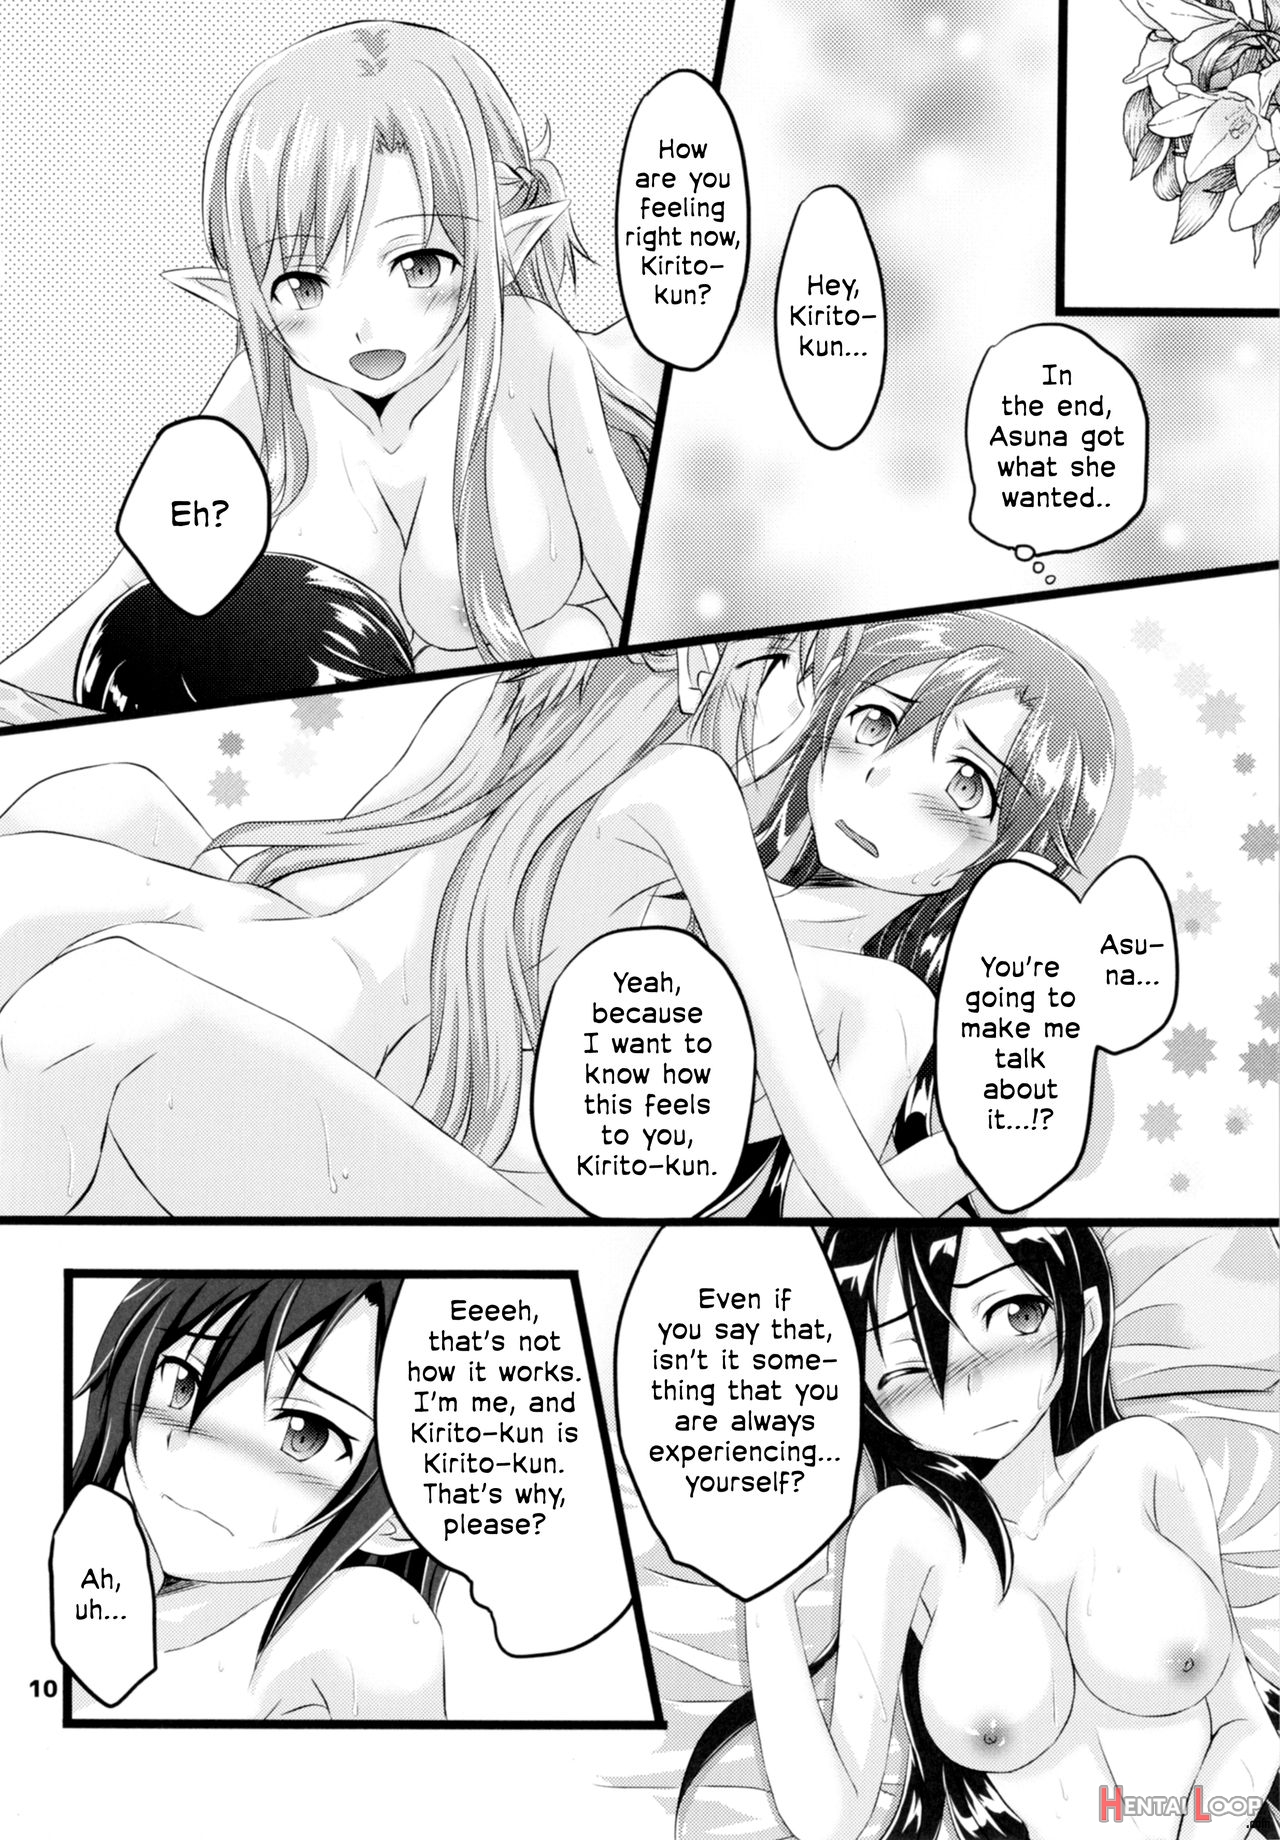 Kiriko-chan To Asobou! 2 page 9